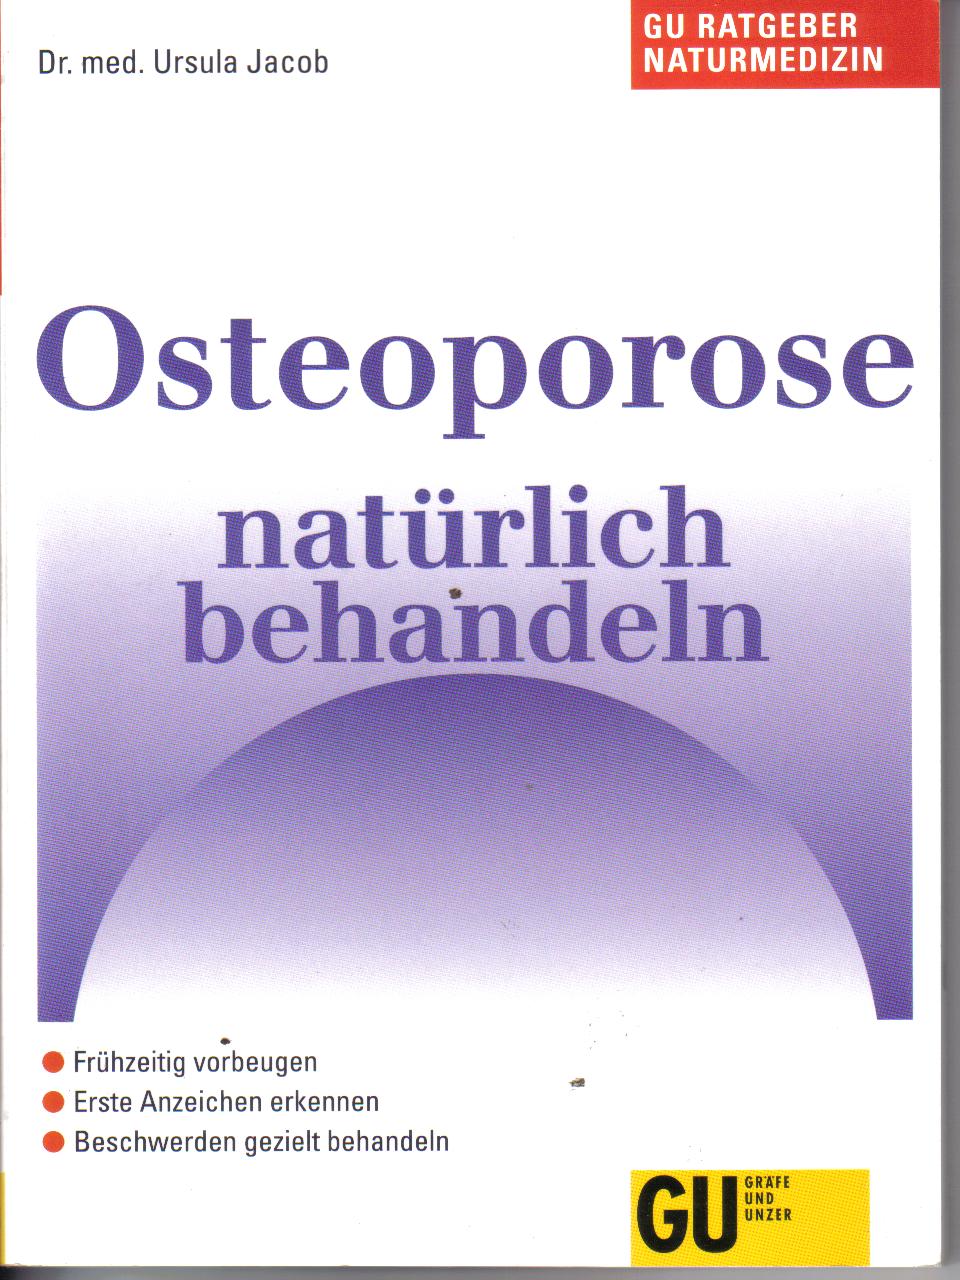 Osteoporose natuerlich behandeln.Dr.med.Ursula Jacob  GU